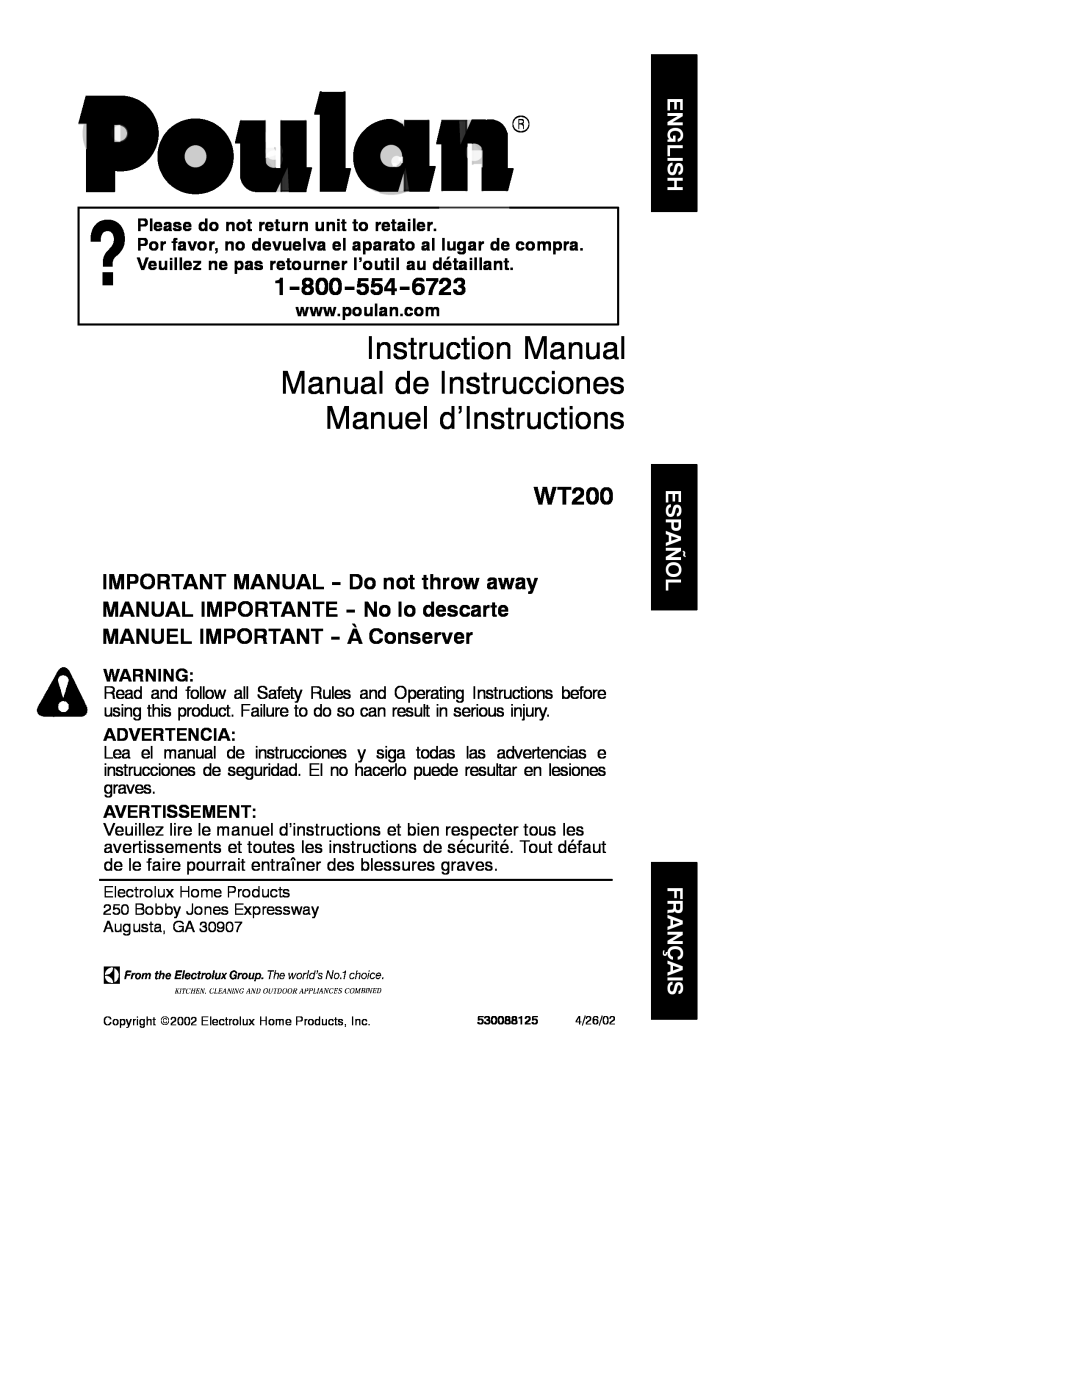 Poulan WT200 instruction manual Please do not return unit to retailer, Advertencia, Avertissement 